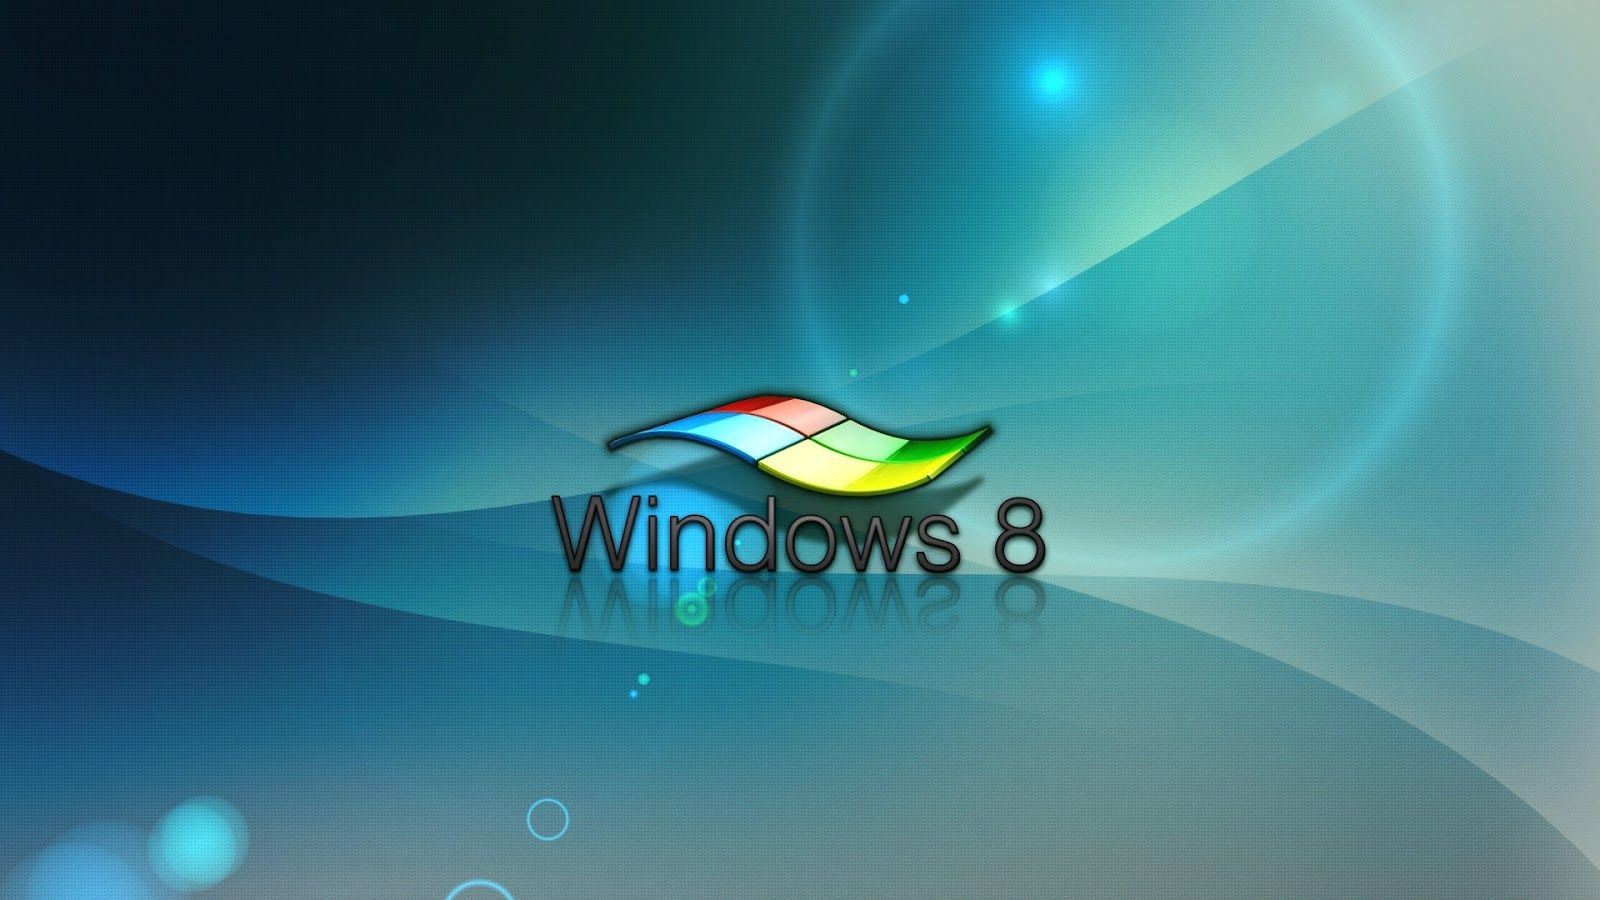 Windows 8 Wallpapers 1080p hd wallon